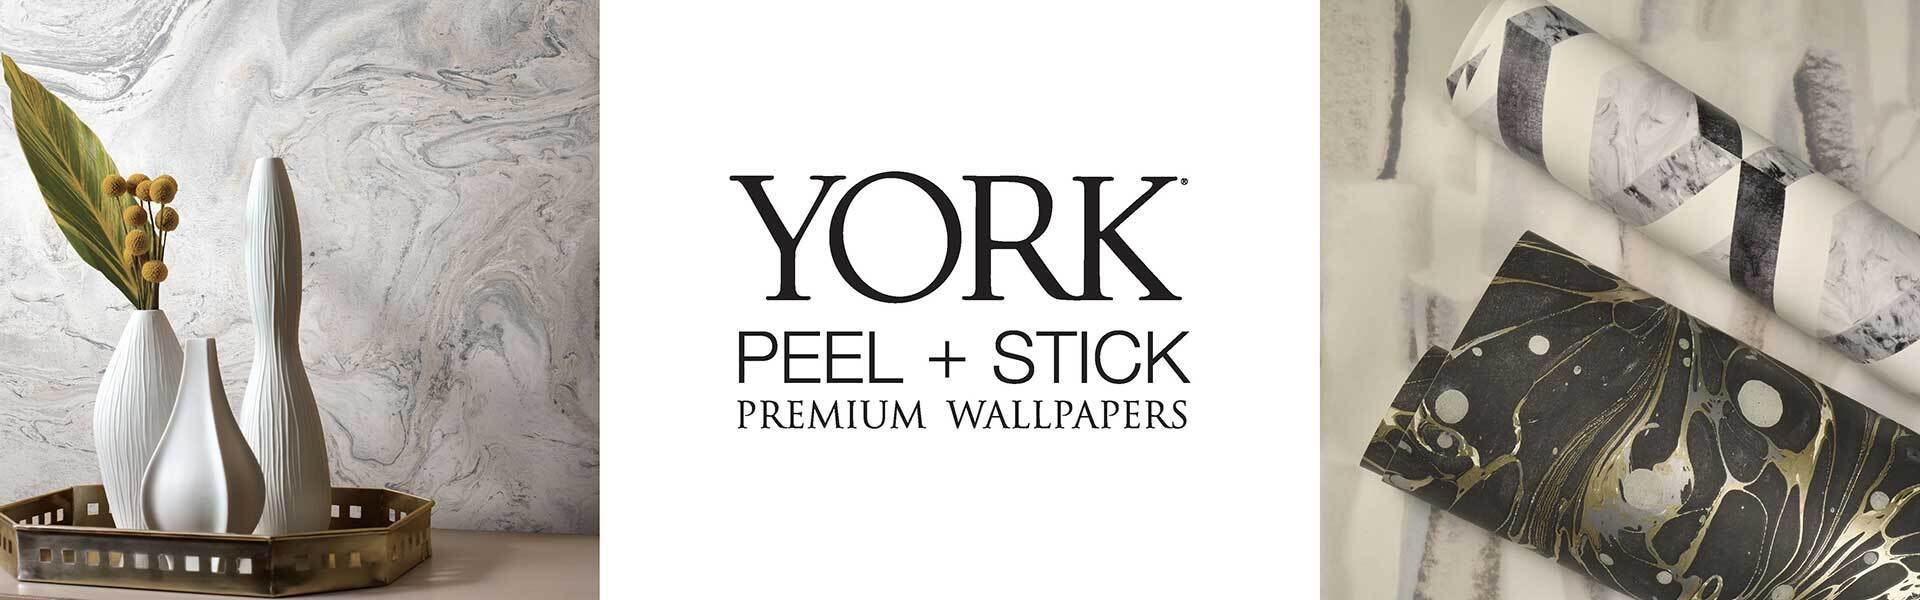 York Premium Peel + Stick – York Wallcoverings